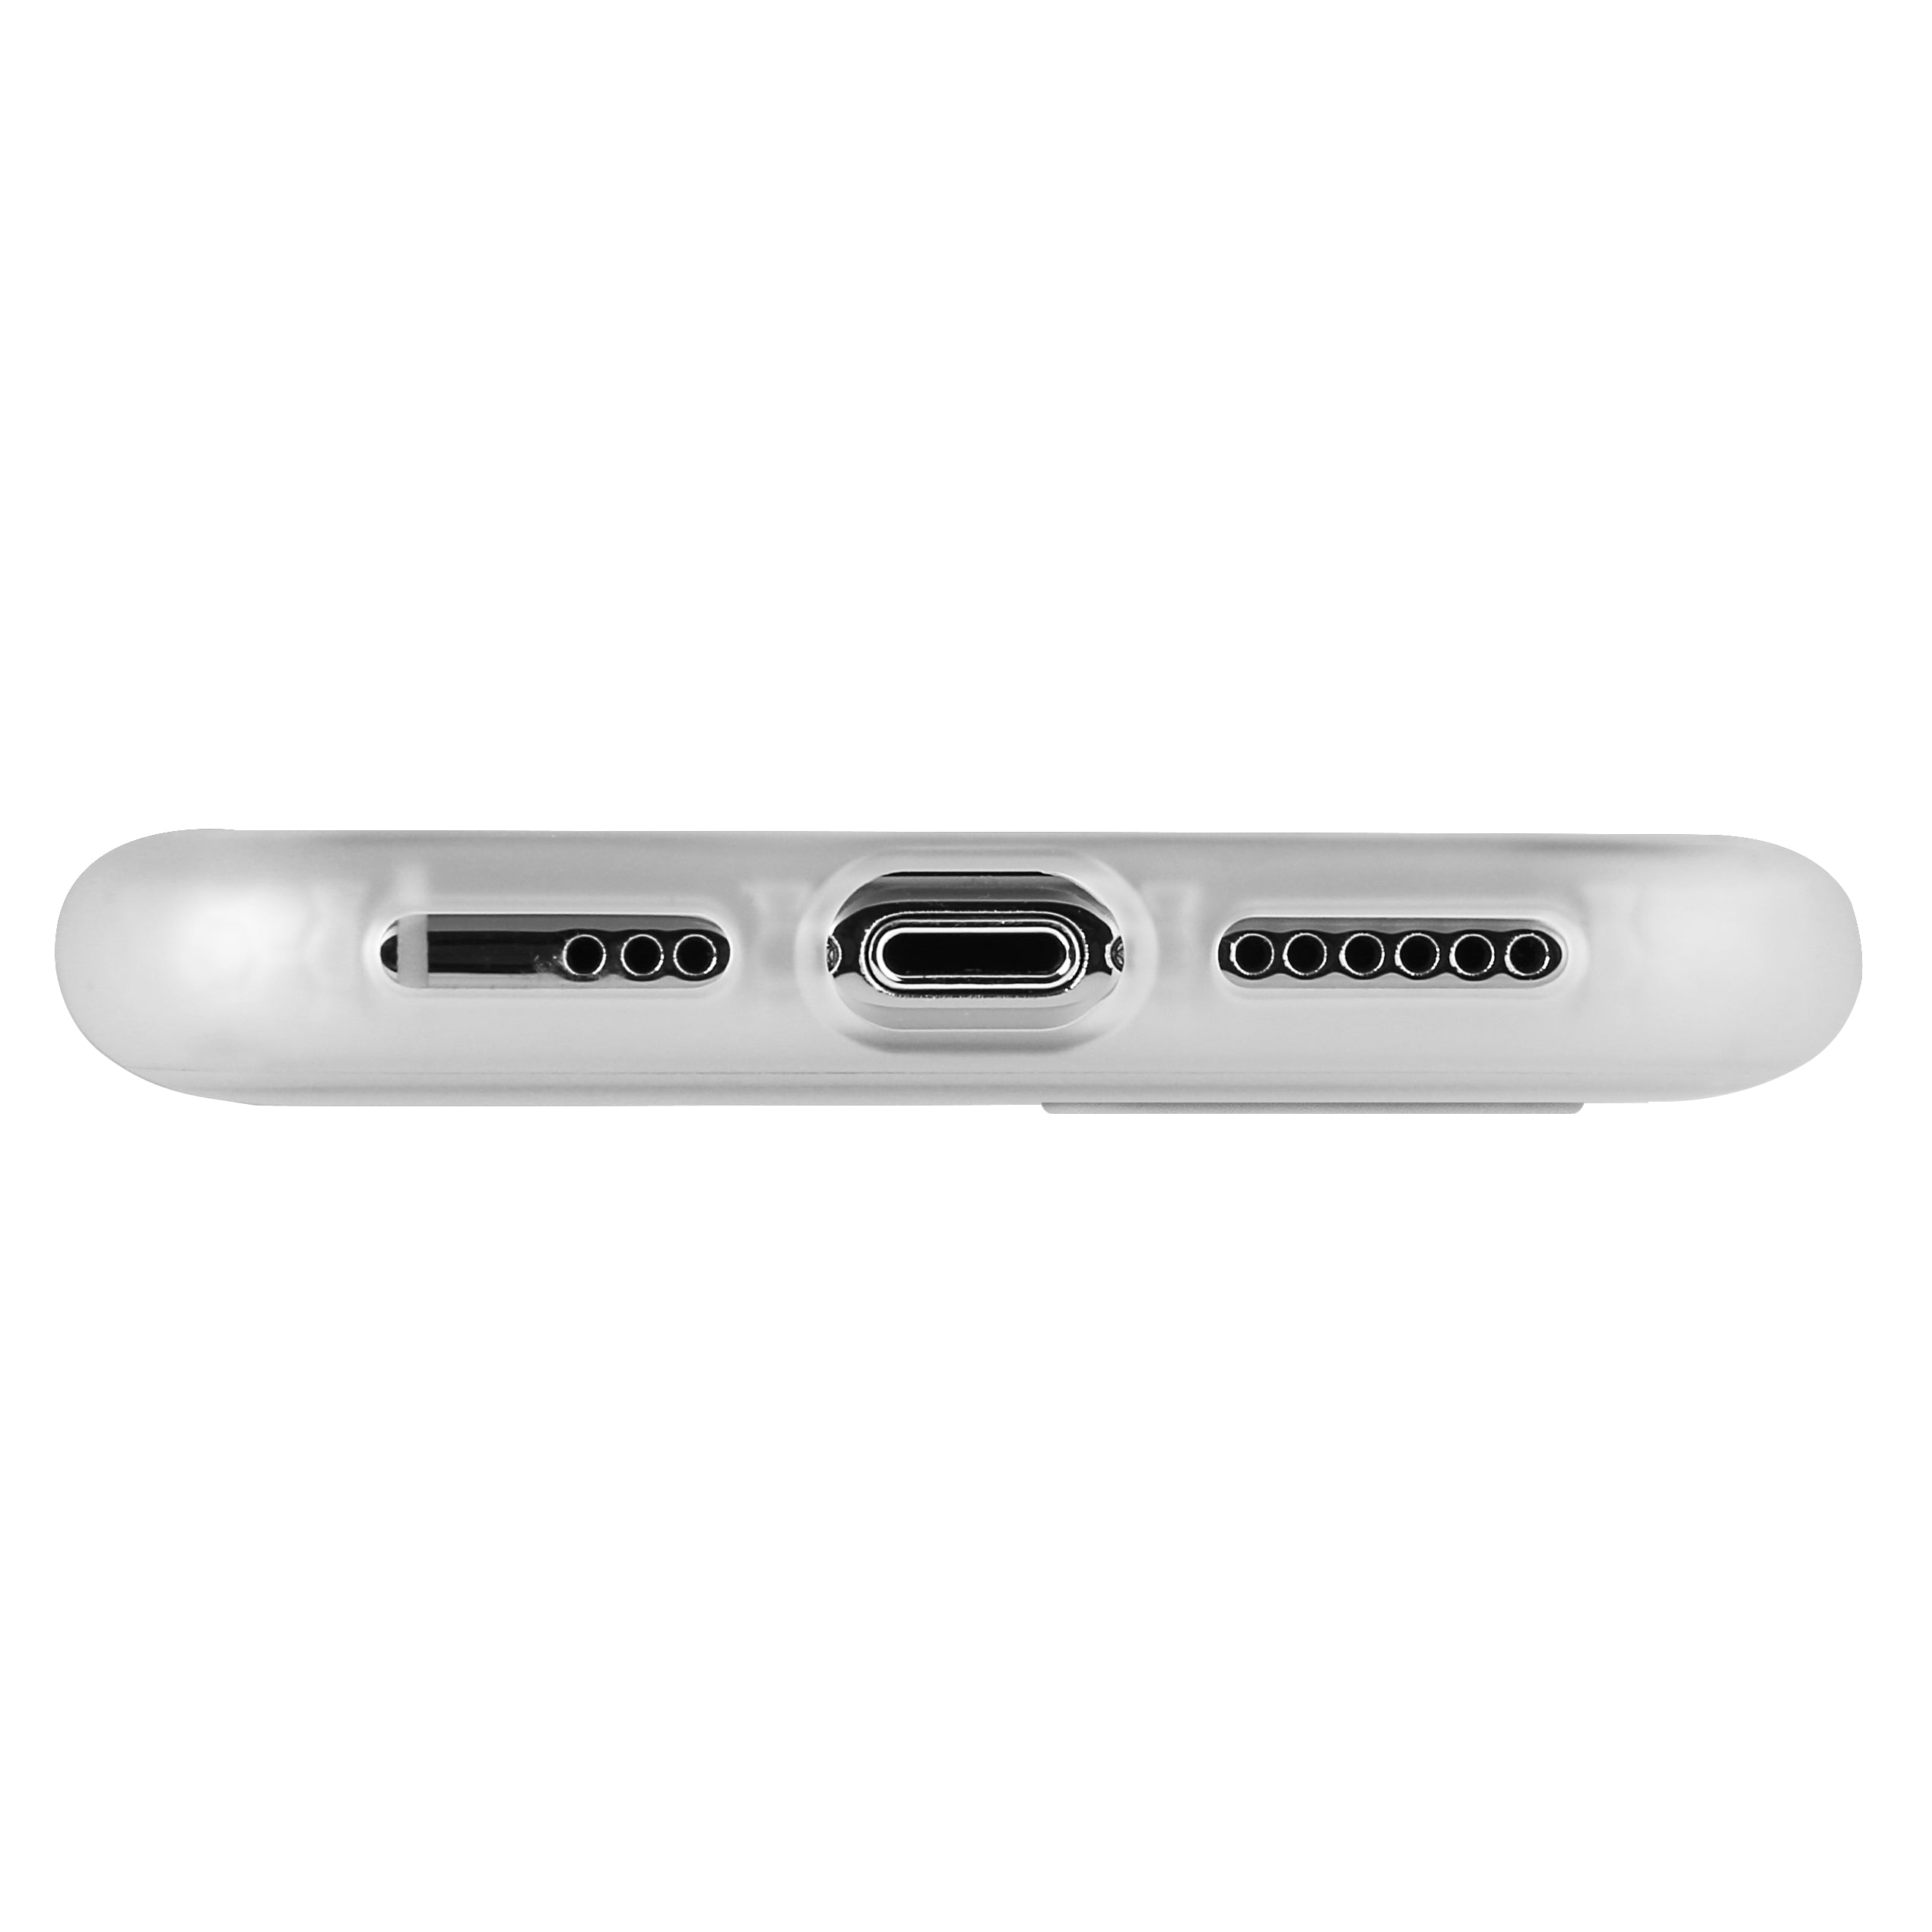 Aero iPhone 11 Pro Max - White